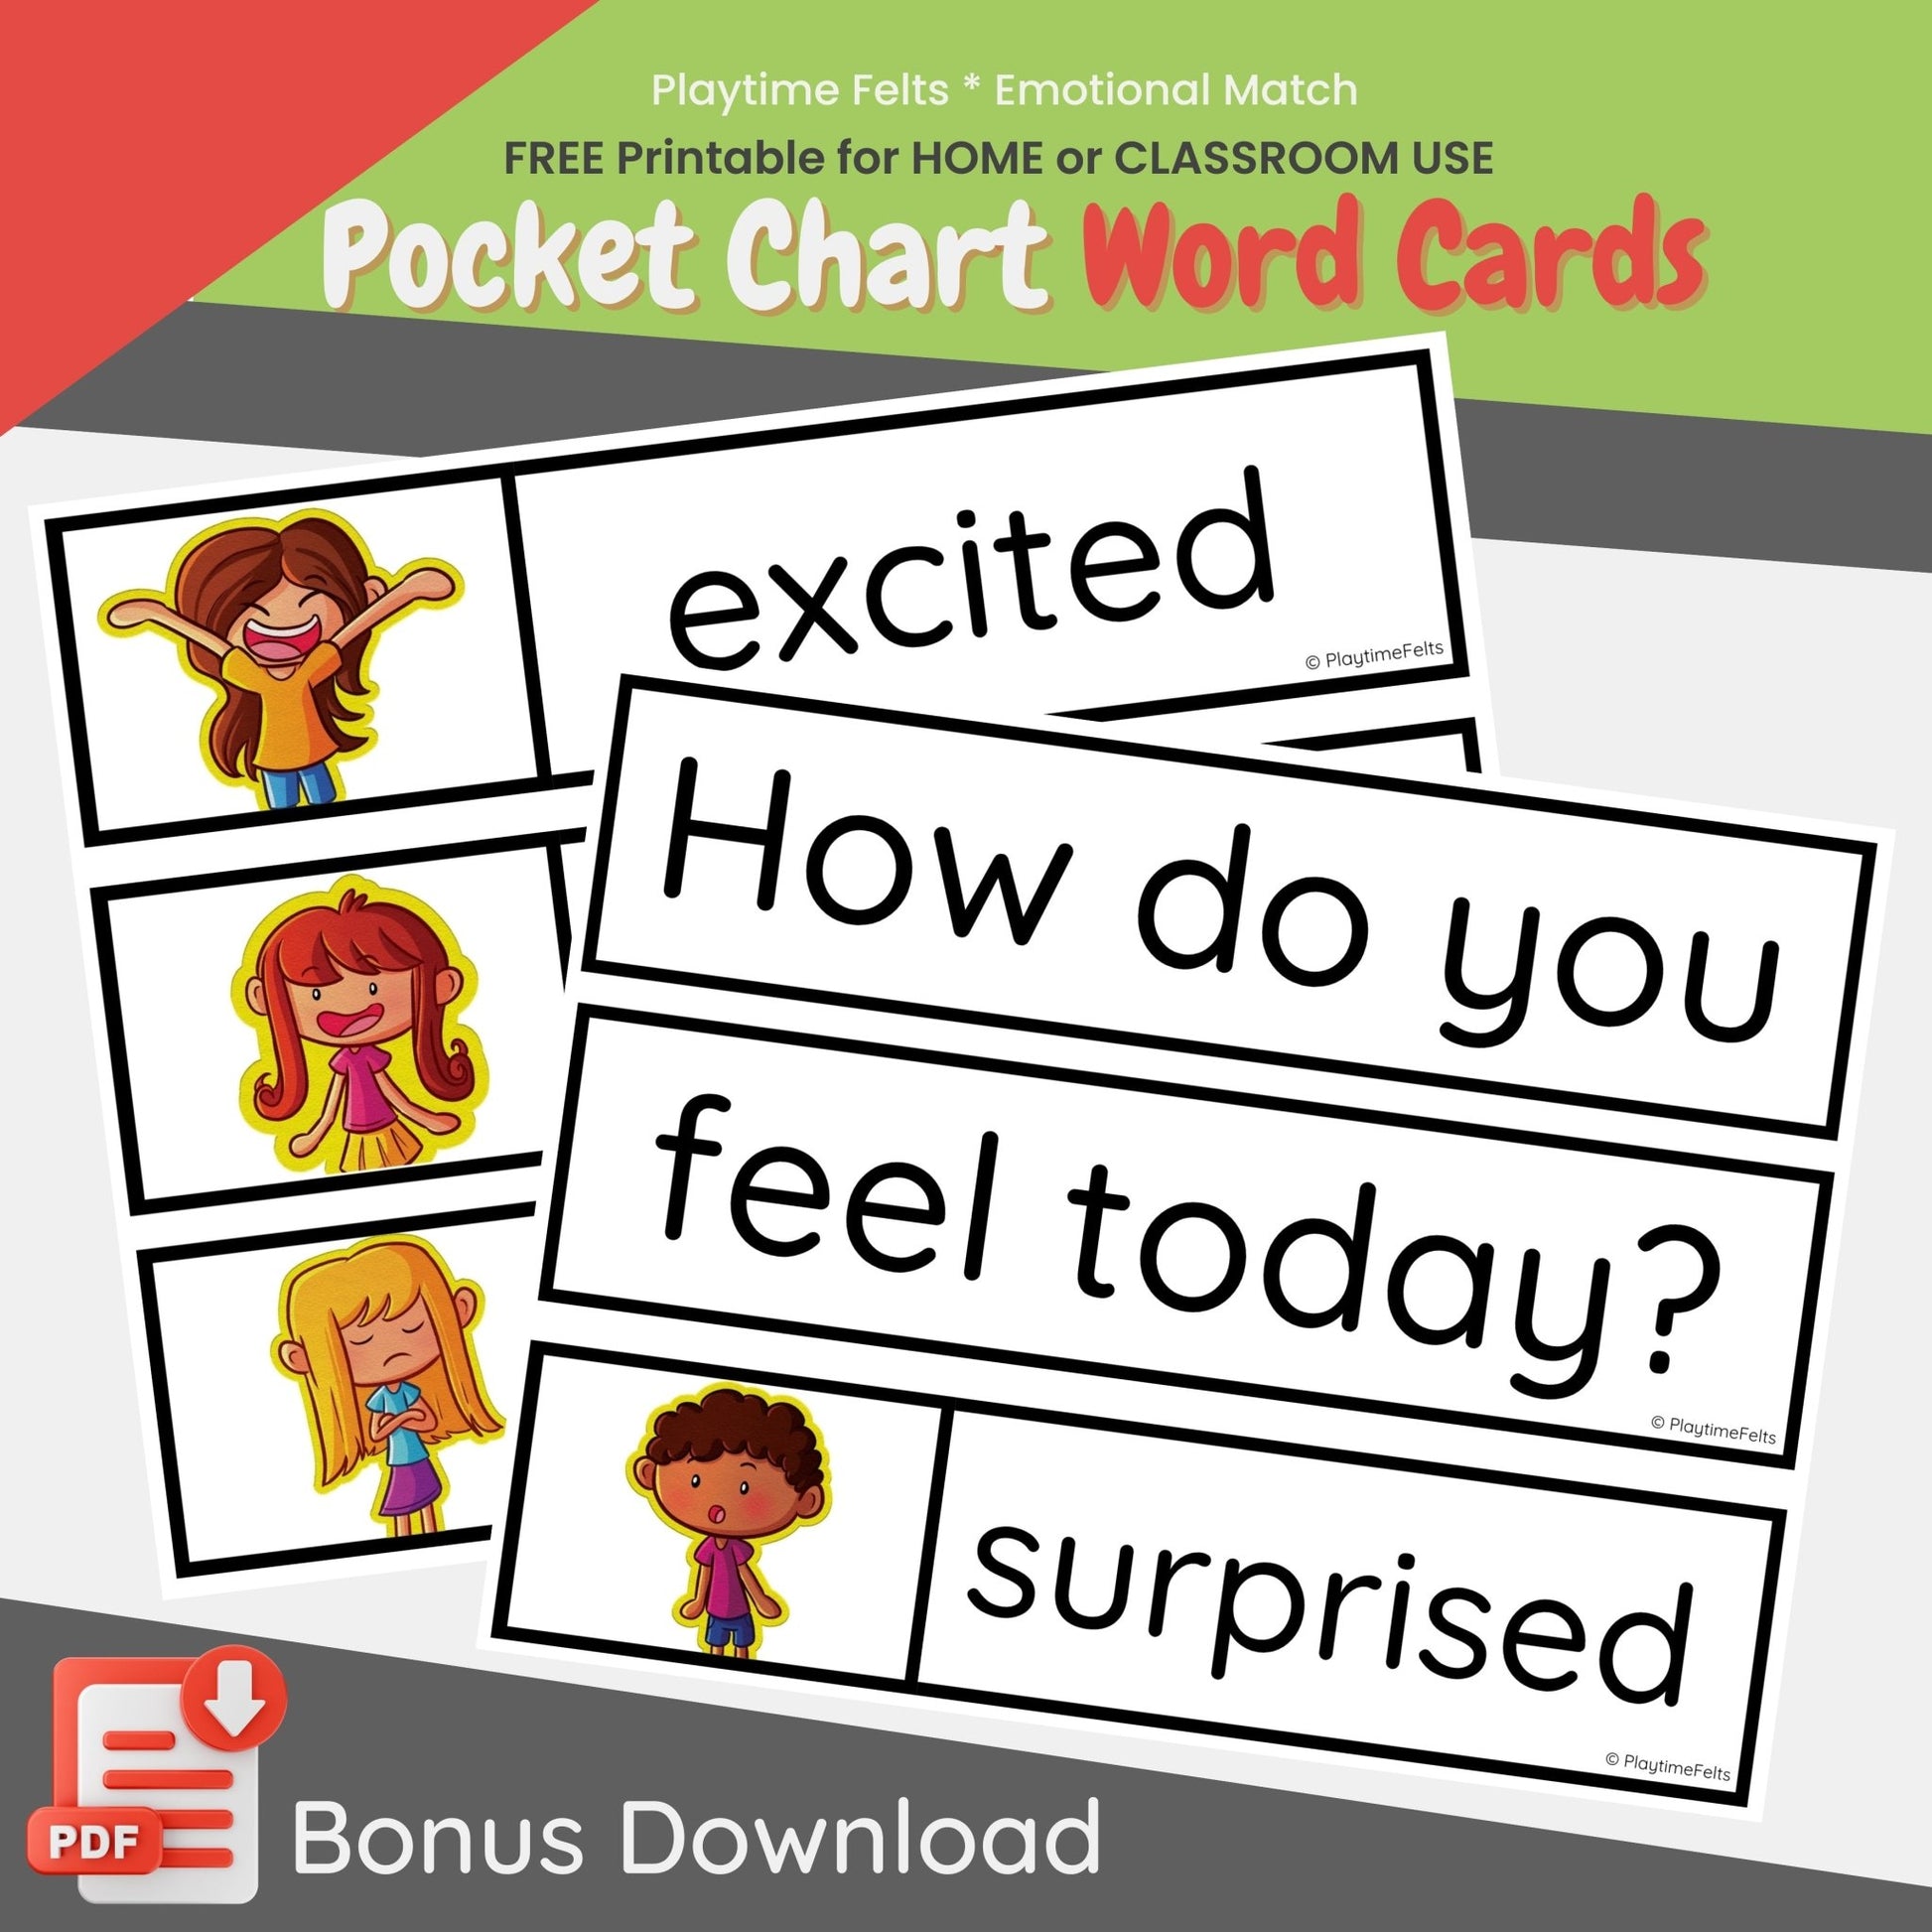 Emotional Match Felt Board Activity Set for Pre-K Plus an INSTANT 📥 Download - Felt Board Stories for Preschool Classroom Playtime Felts